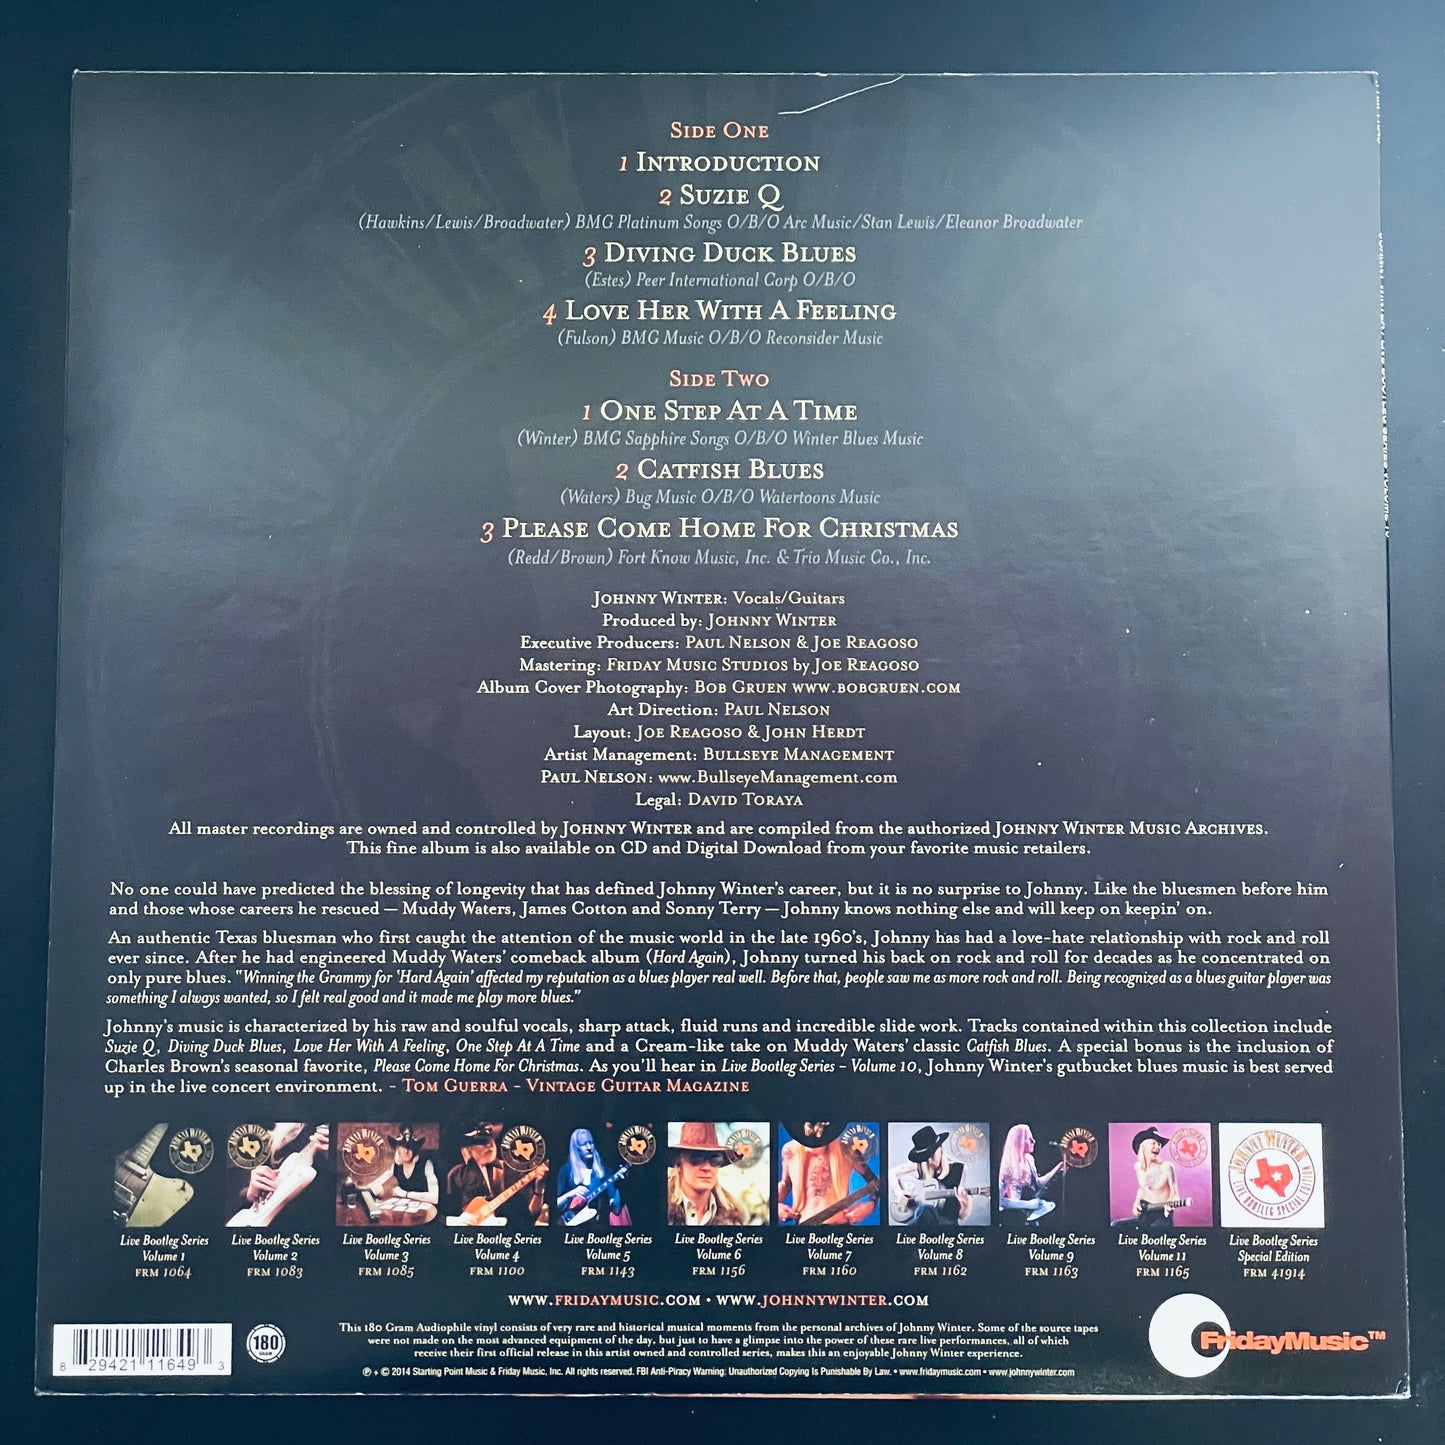 Johnny Winter - Live Bootleg Series Vol. 10 LP (used)